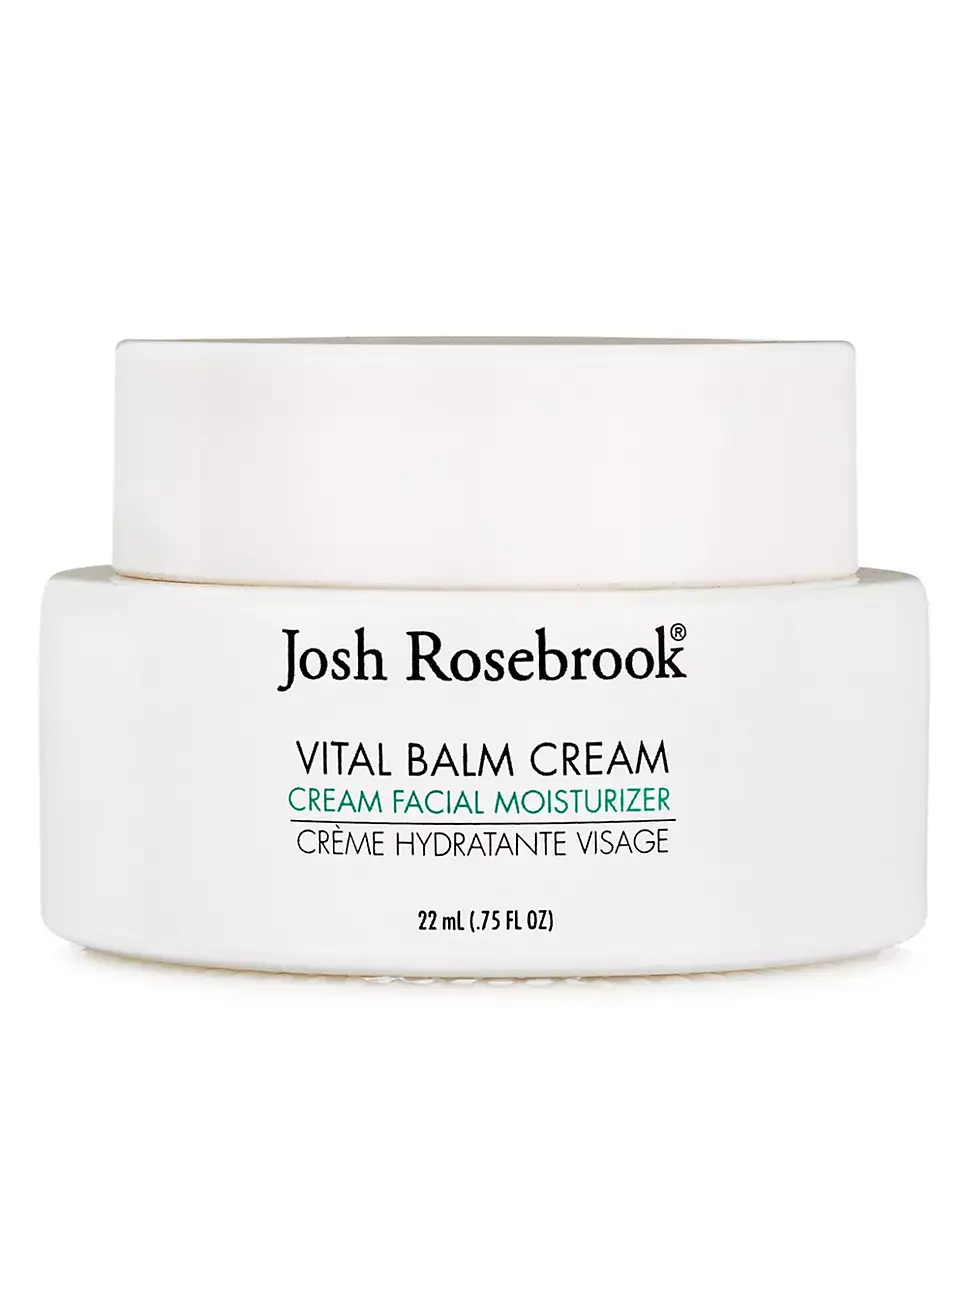 Josh Rosebrook Josh Rosebrook Unscented Vital Balm Cream 0.75oz